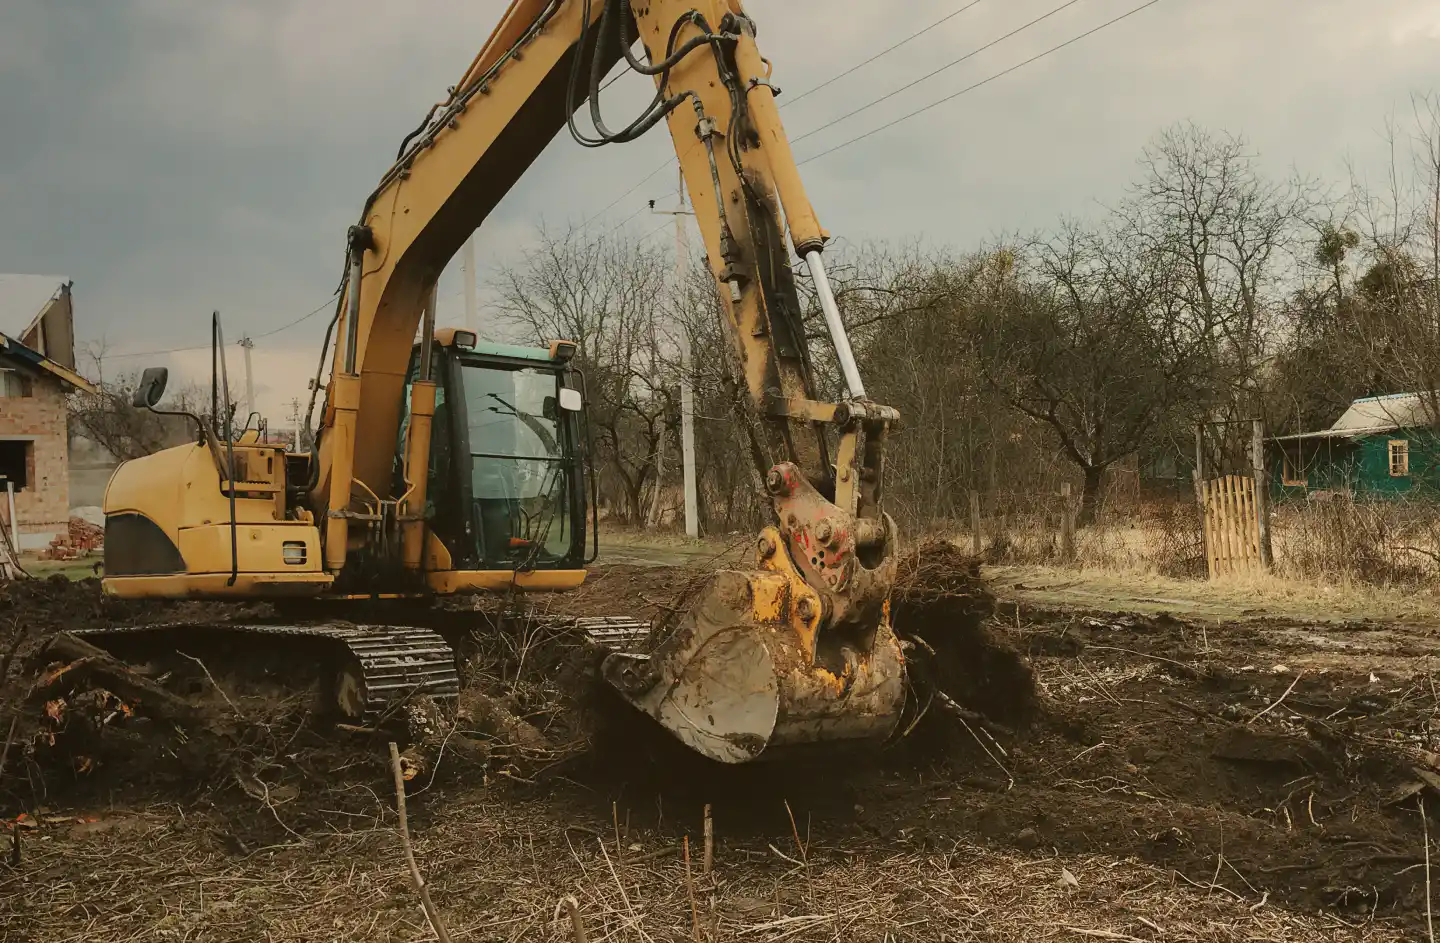 excavator land clearing backyard verbena al